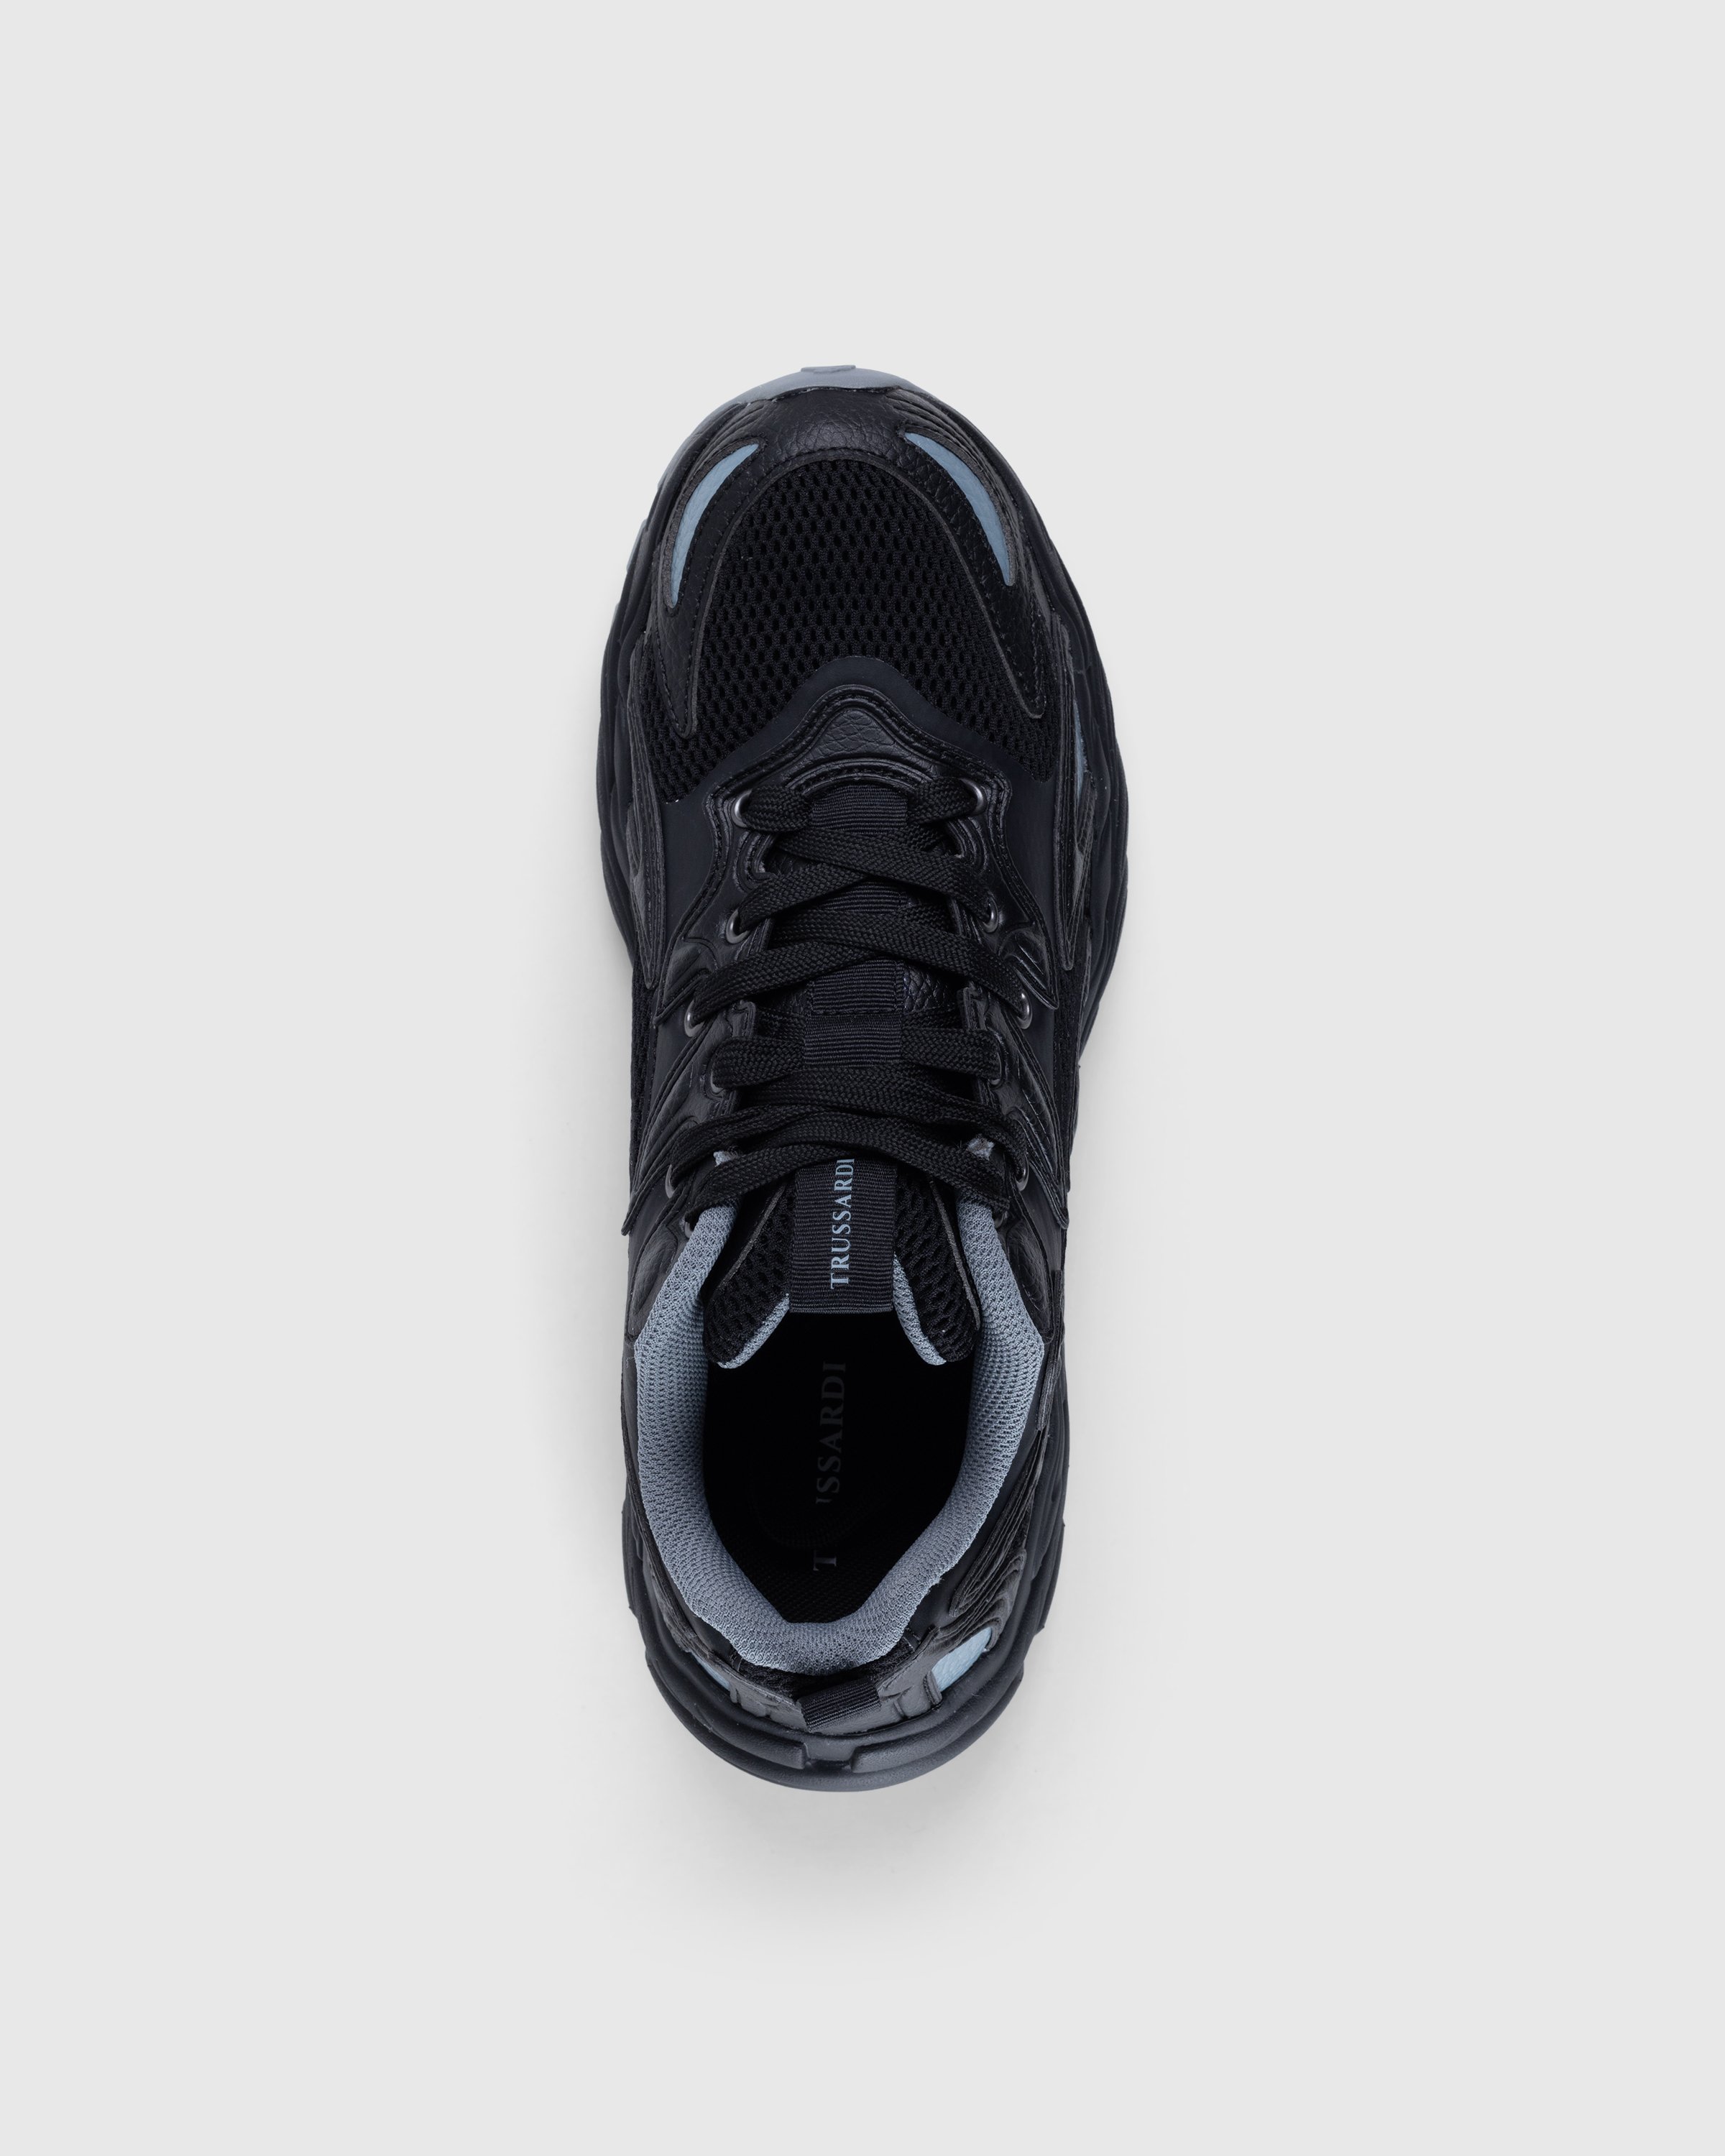 Trussardi - Retro Runner Sneaker - Footwear - Black - Image 5